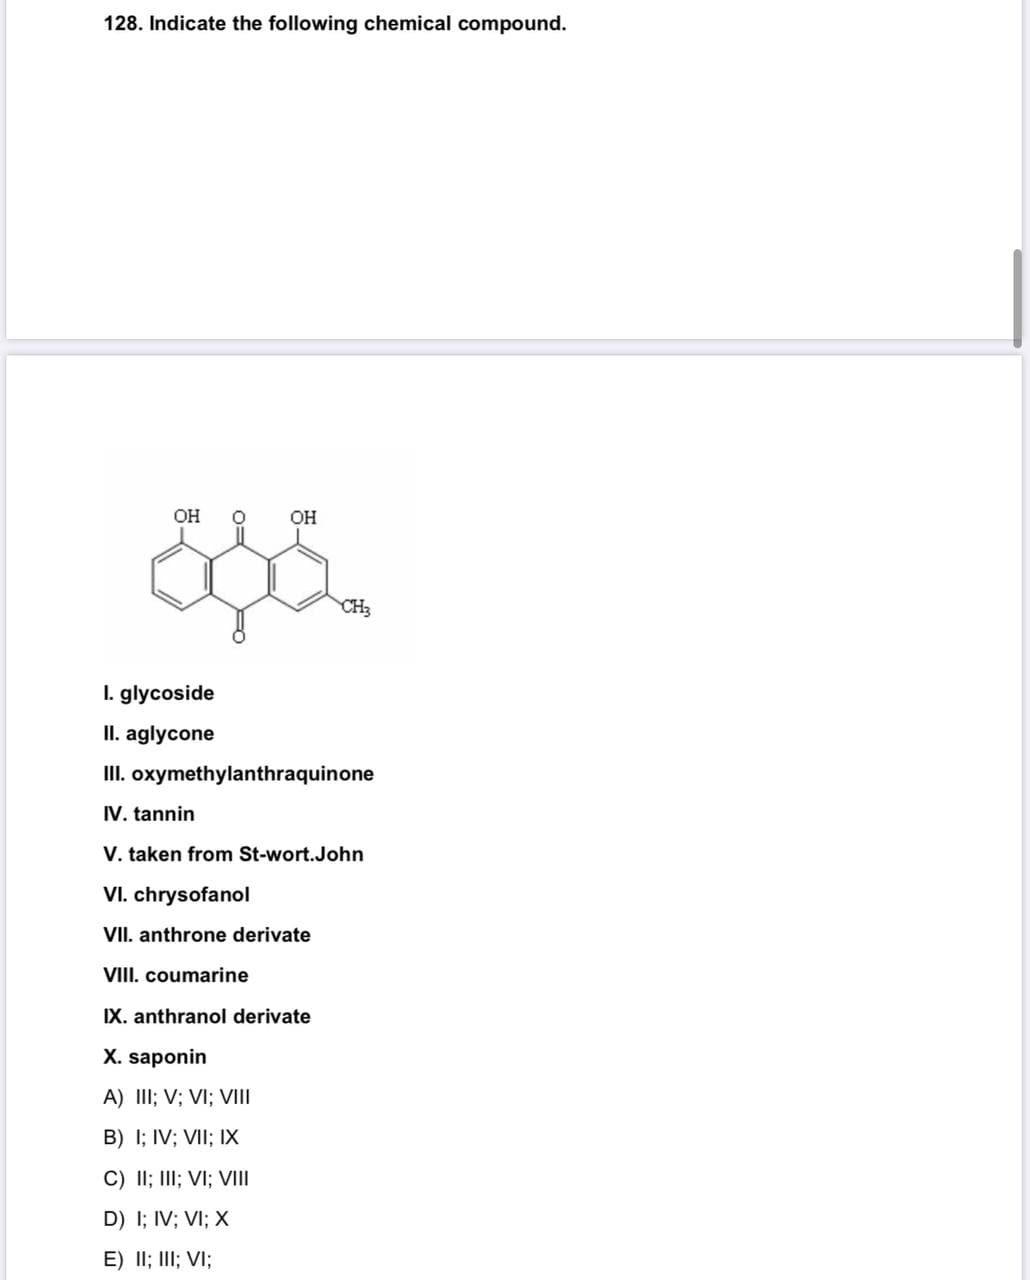 128. Indicate the following chemical compound.
OH
OH
CH3
I. glycoside
II. aglycone
II. oxymethylanthraquinone
IV. tannin
V. taken from St-wort.John
VI. chrysofanol
VII. anthrone derivate
VIII. coumarine
IX. anthranol derivate
X. saponin
A) III; V; VI; VIII
B) I; IV; VII; IX
C) II; III; VI; VIII
D) I; IV; VI; X
E) II; III; VI;
